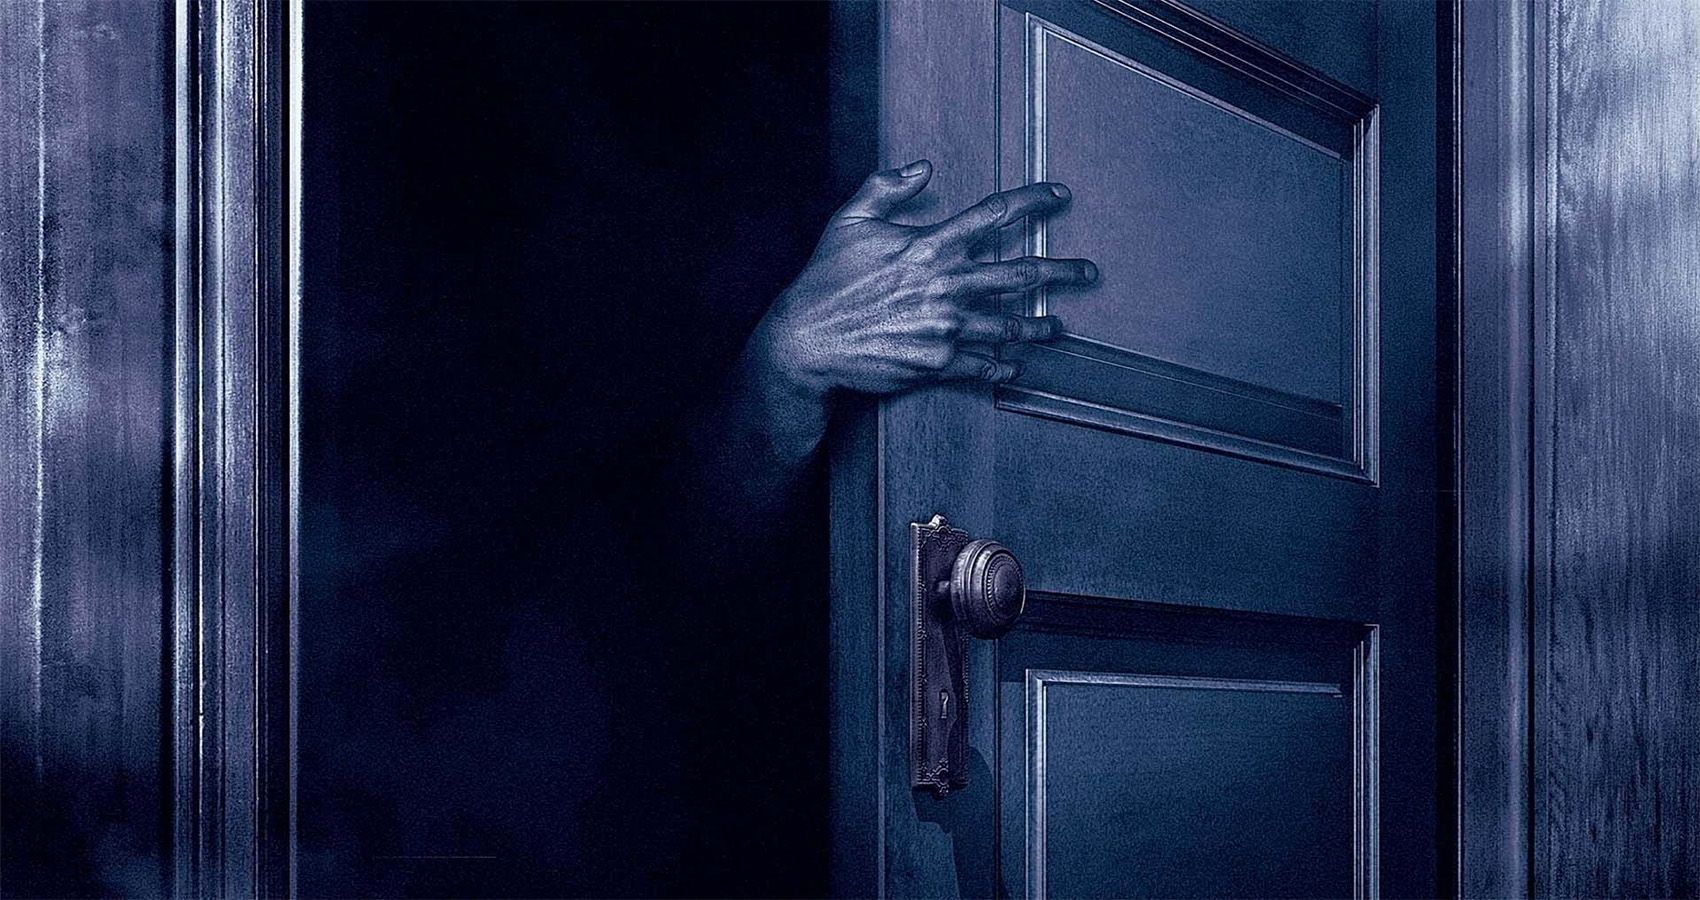 A hand reaching through a closet door in Stephen King's The Boogeyman